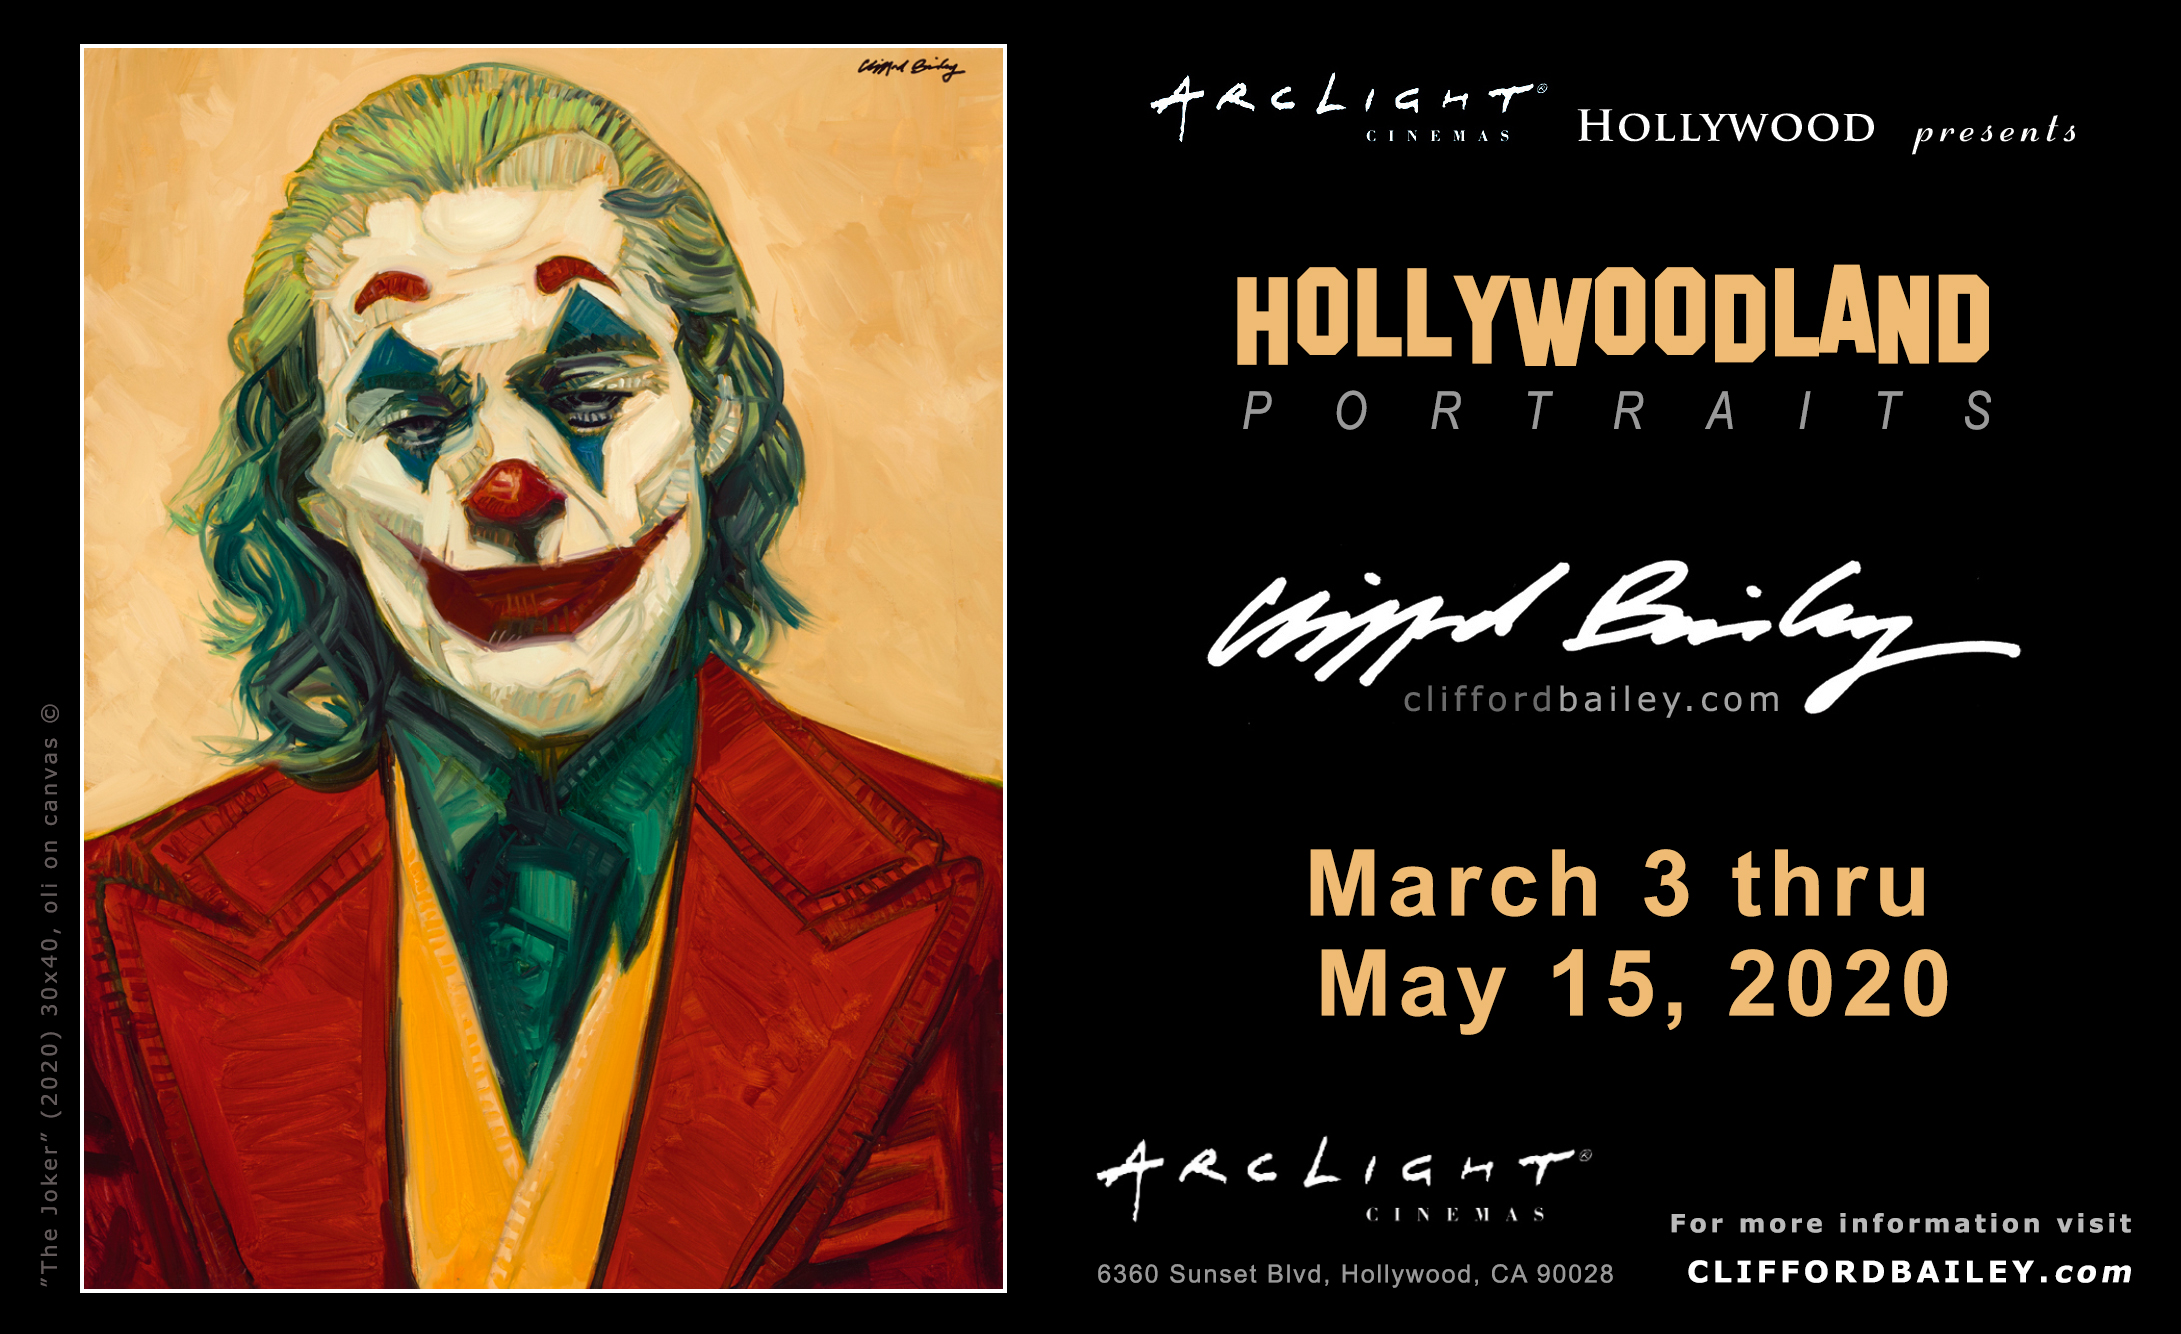 Clifford Bailey Fine Art, Hollywoodland Portraits, Arclight Hollywood